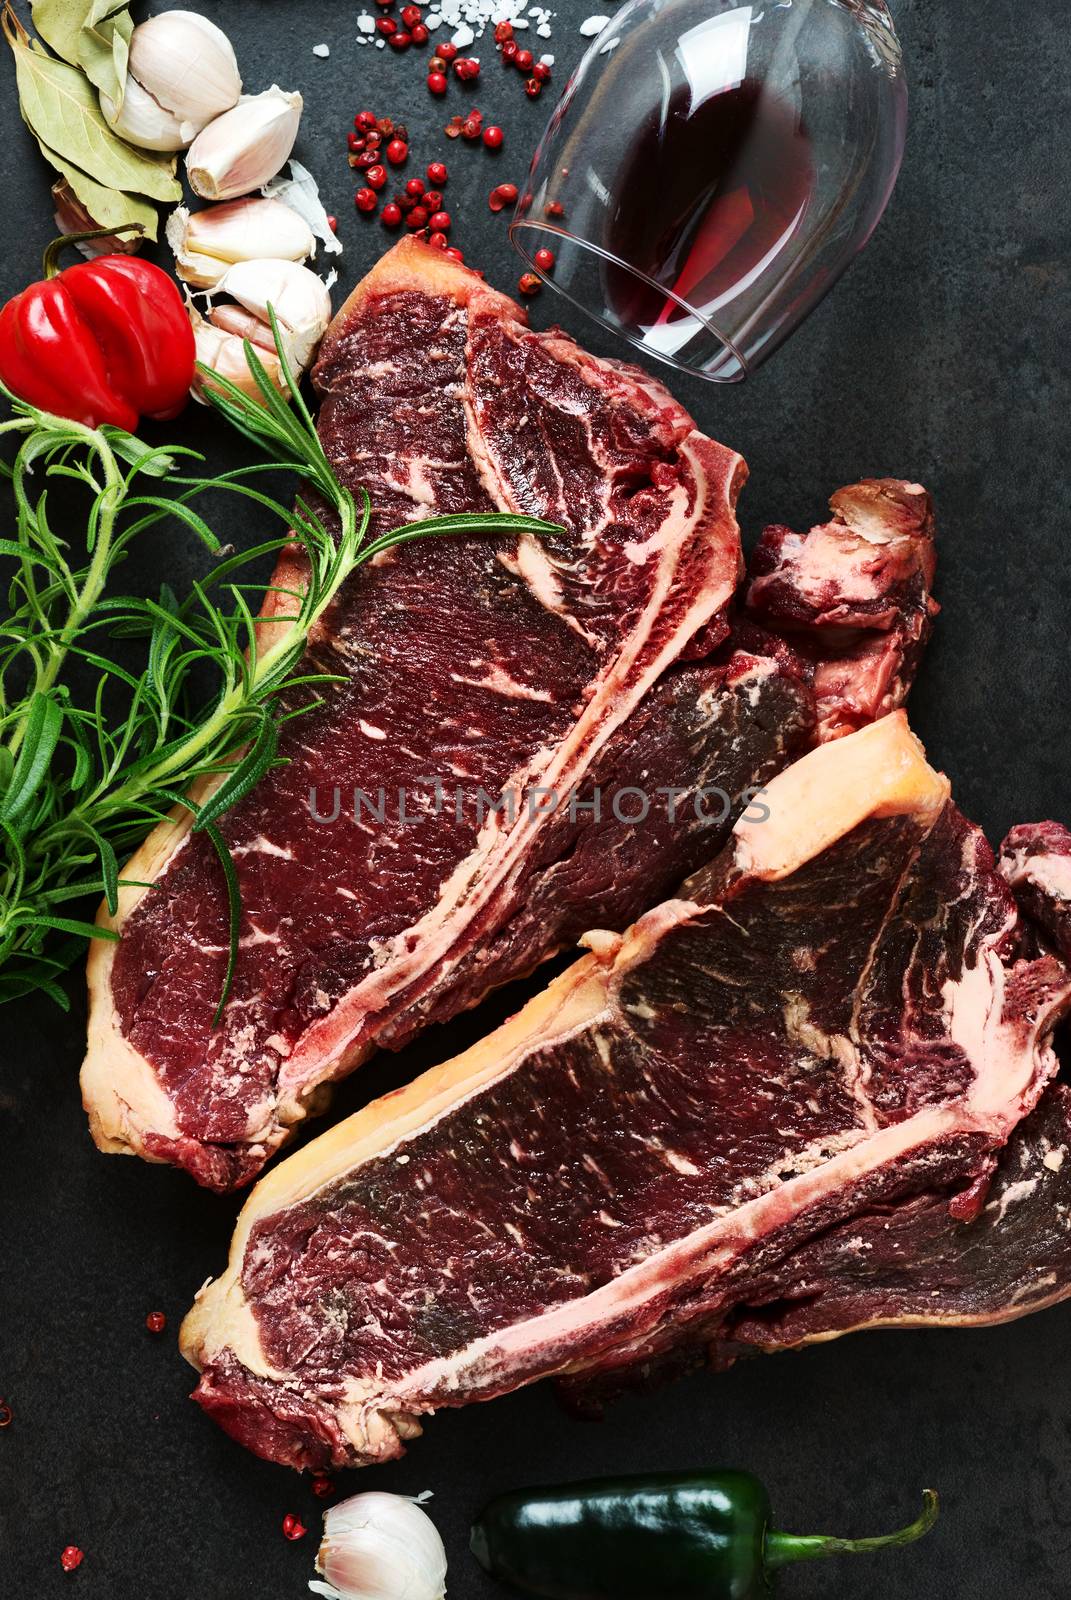 Raw aged steak and seasoning on dark background by Nanisimova